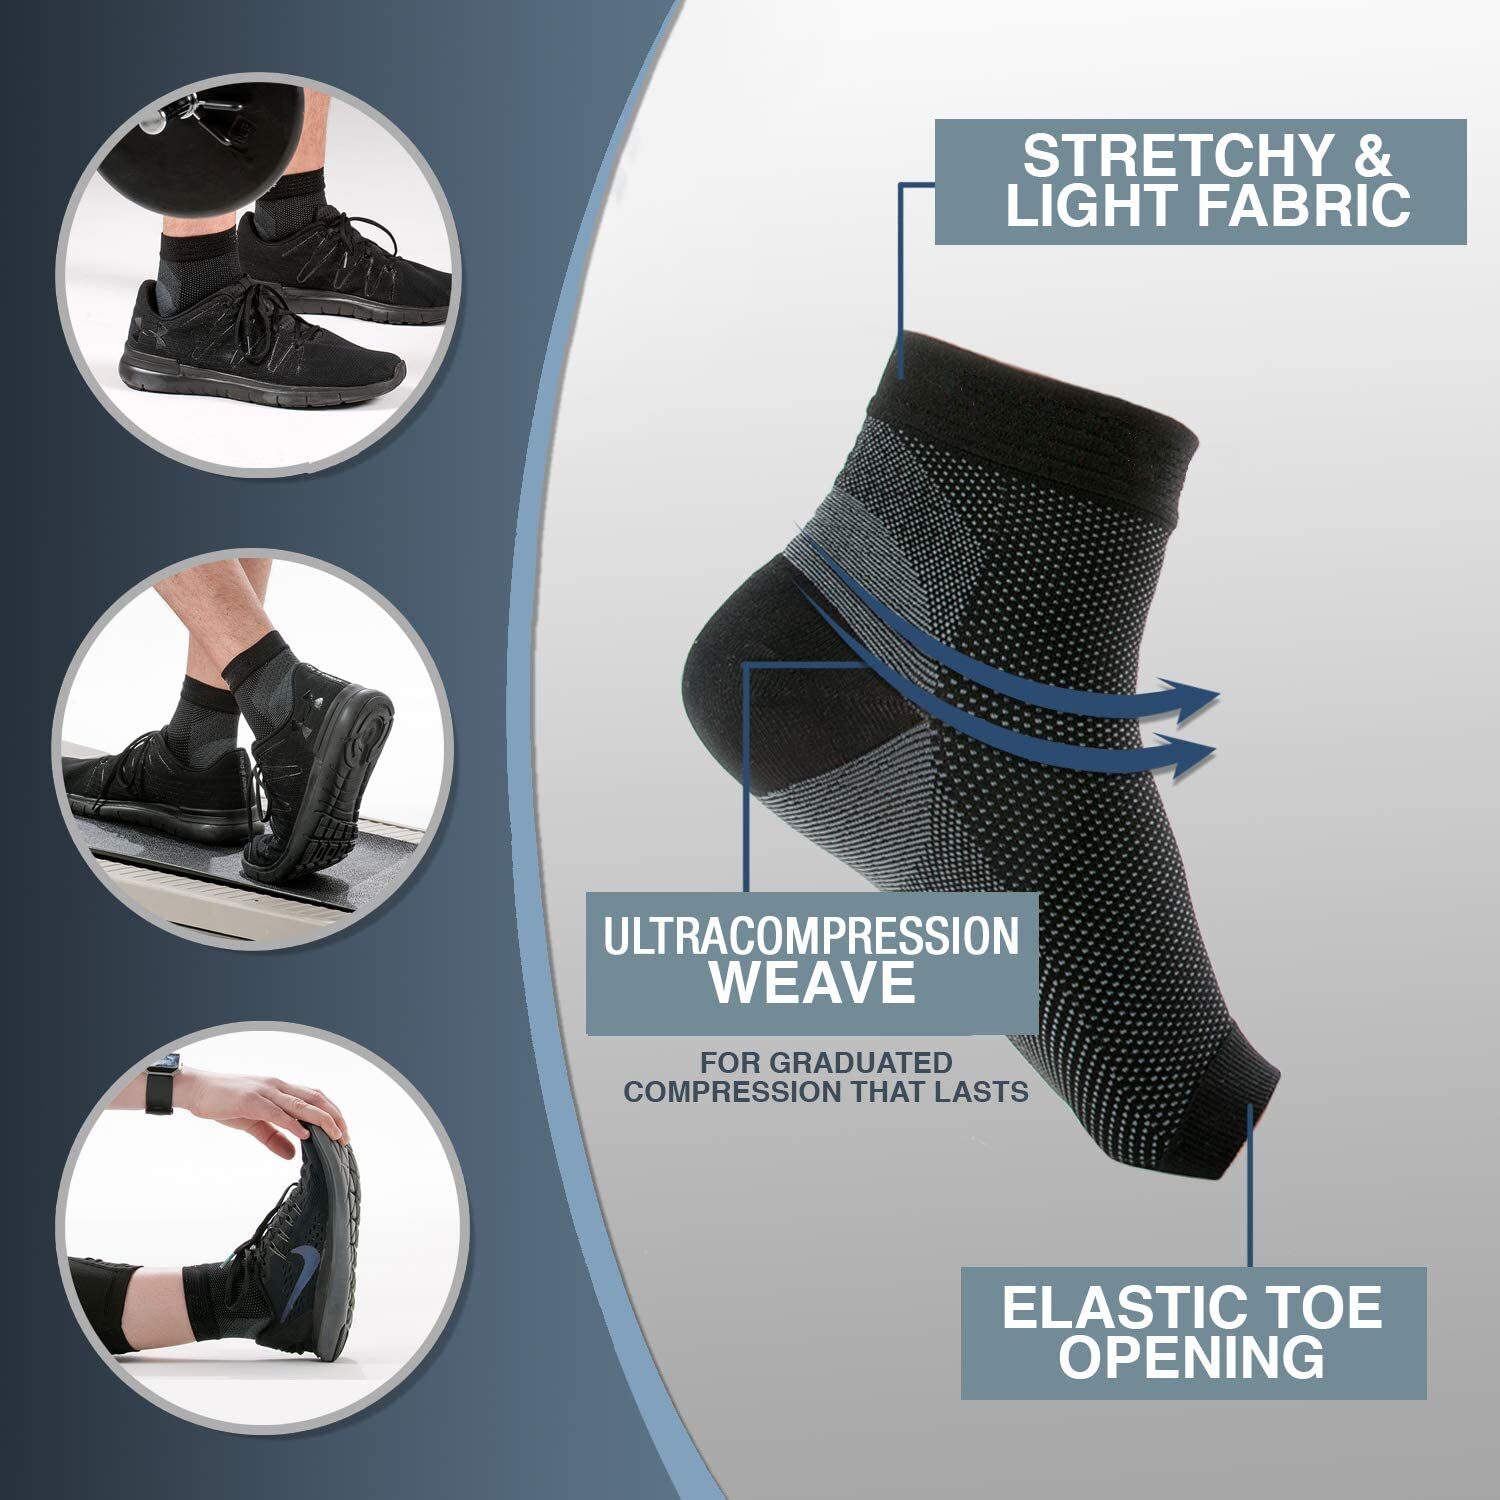 Compression Socks for Men & Women Shop Now Only £8.99!